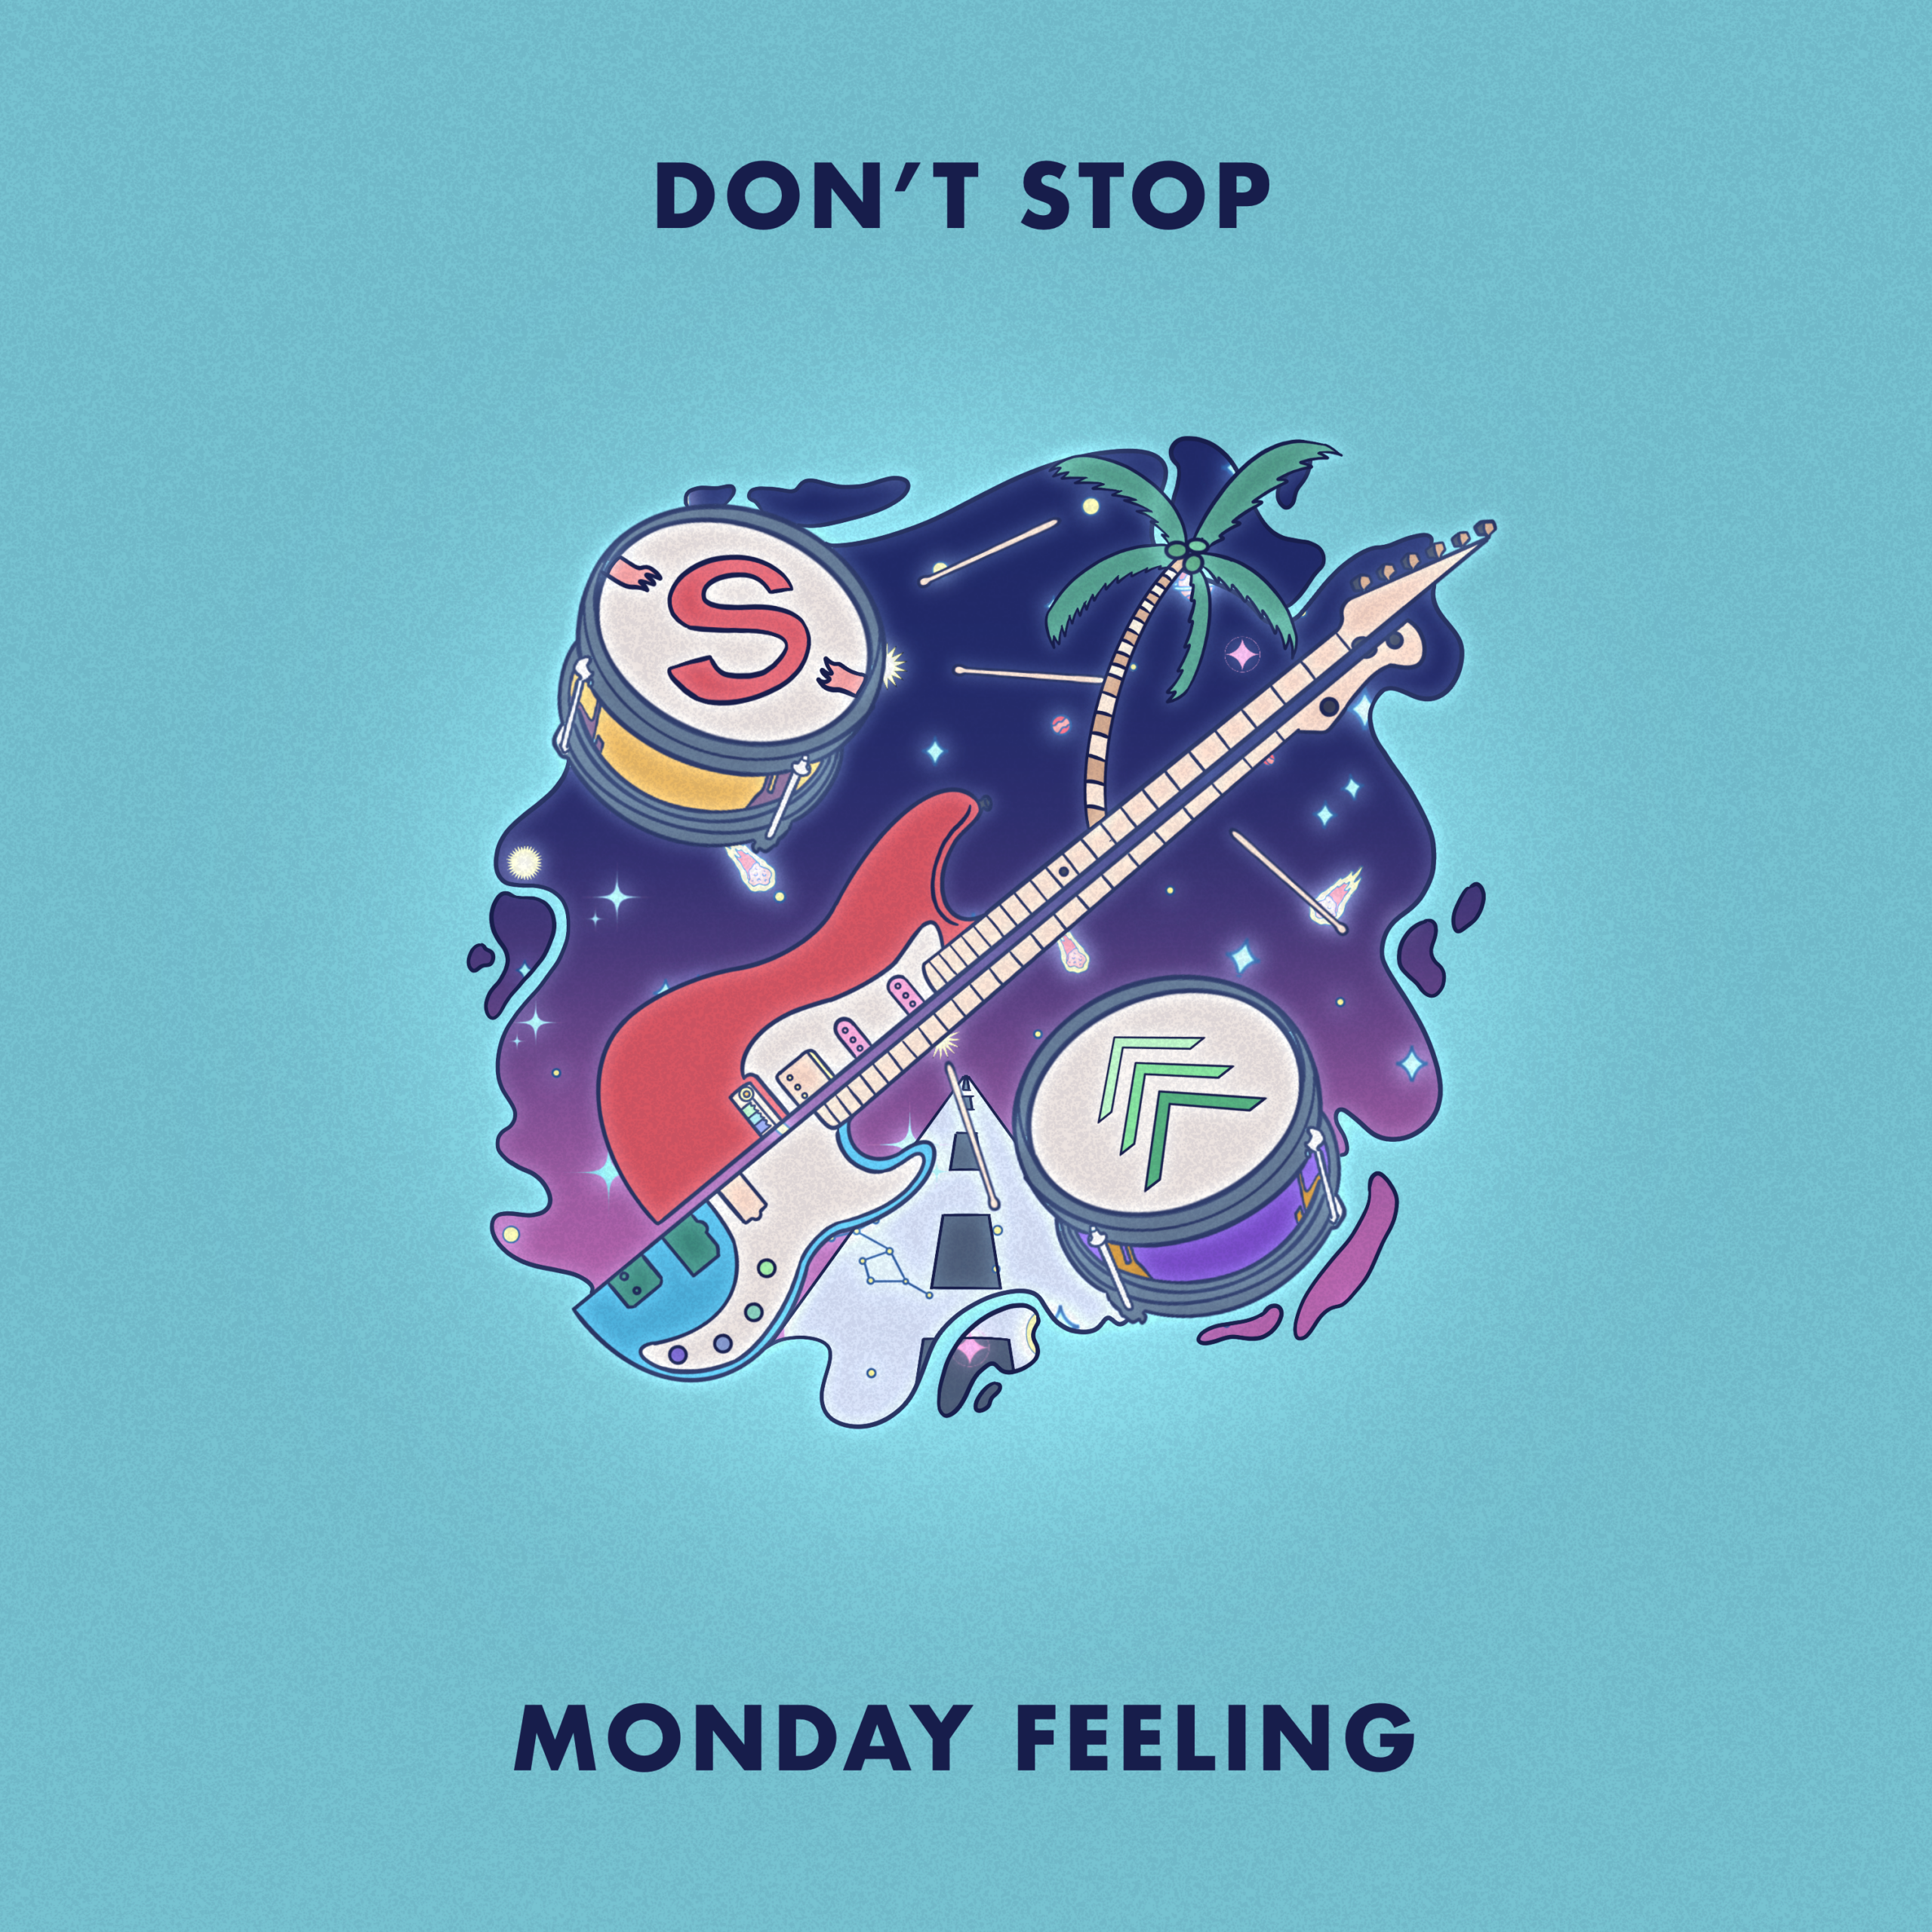 Rock & Pop feelings Song. Don't you feel the Edsels. Monday feeling